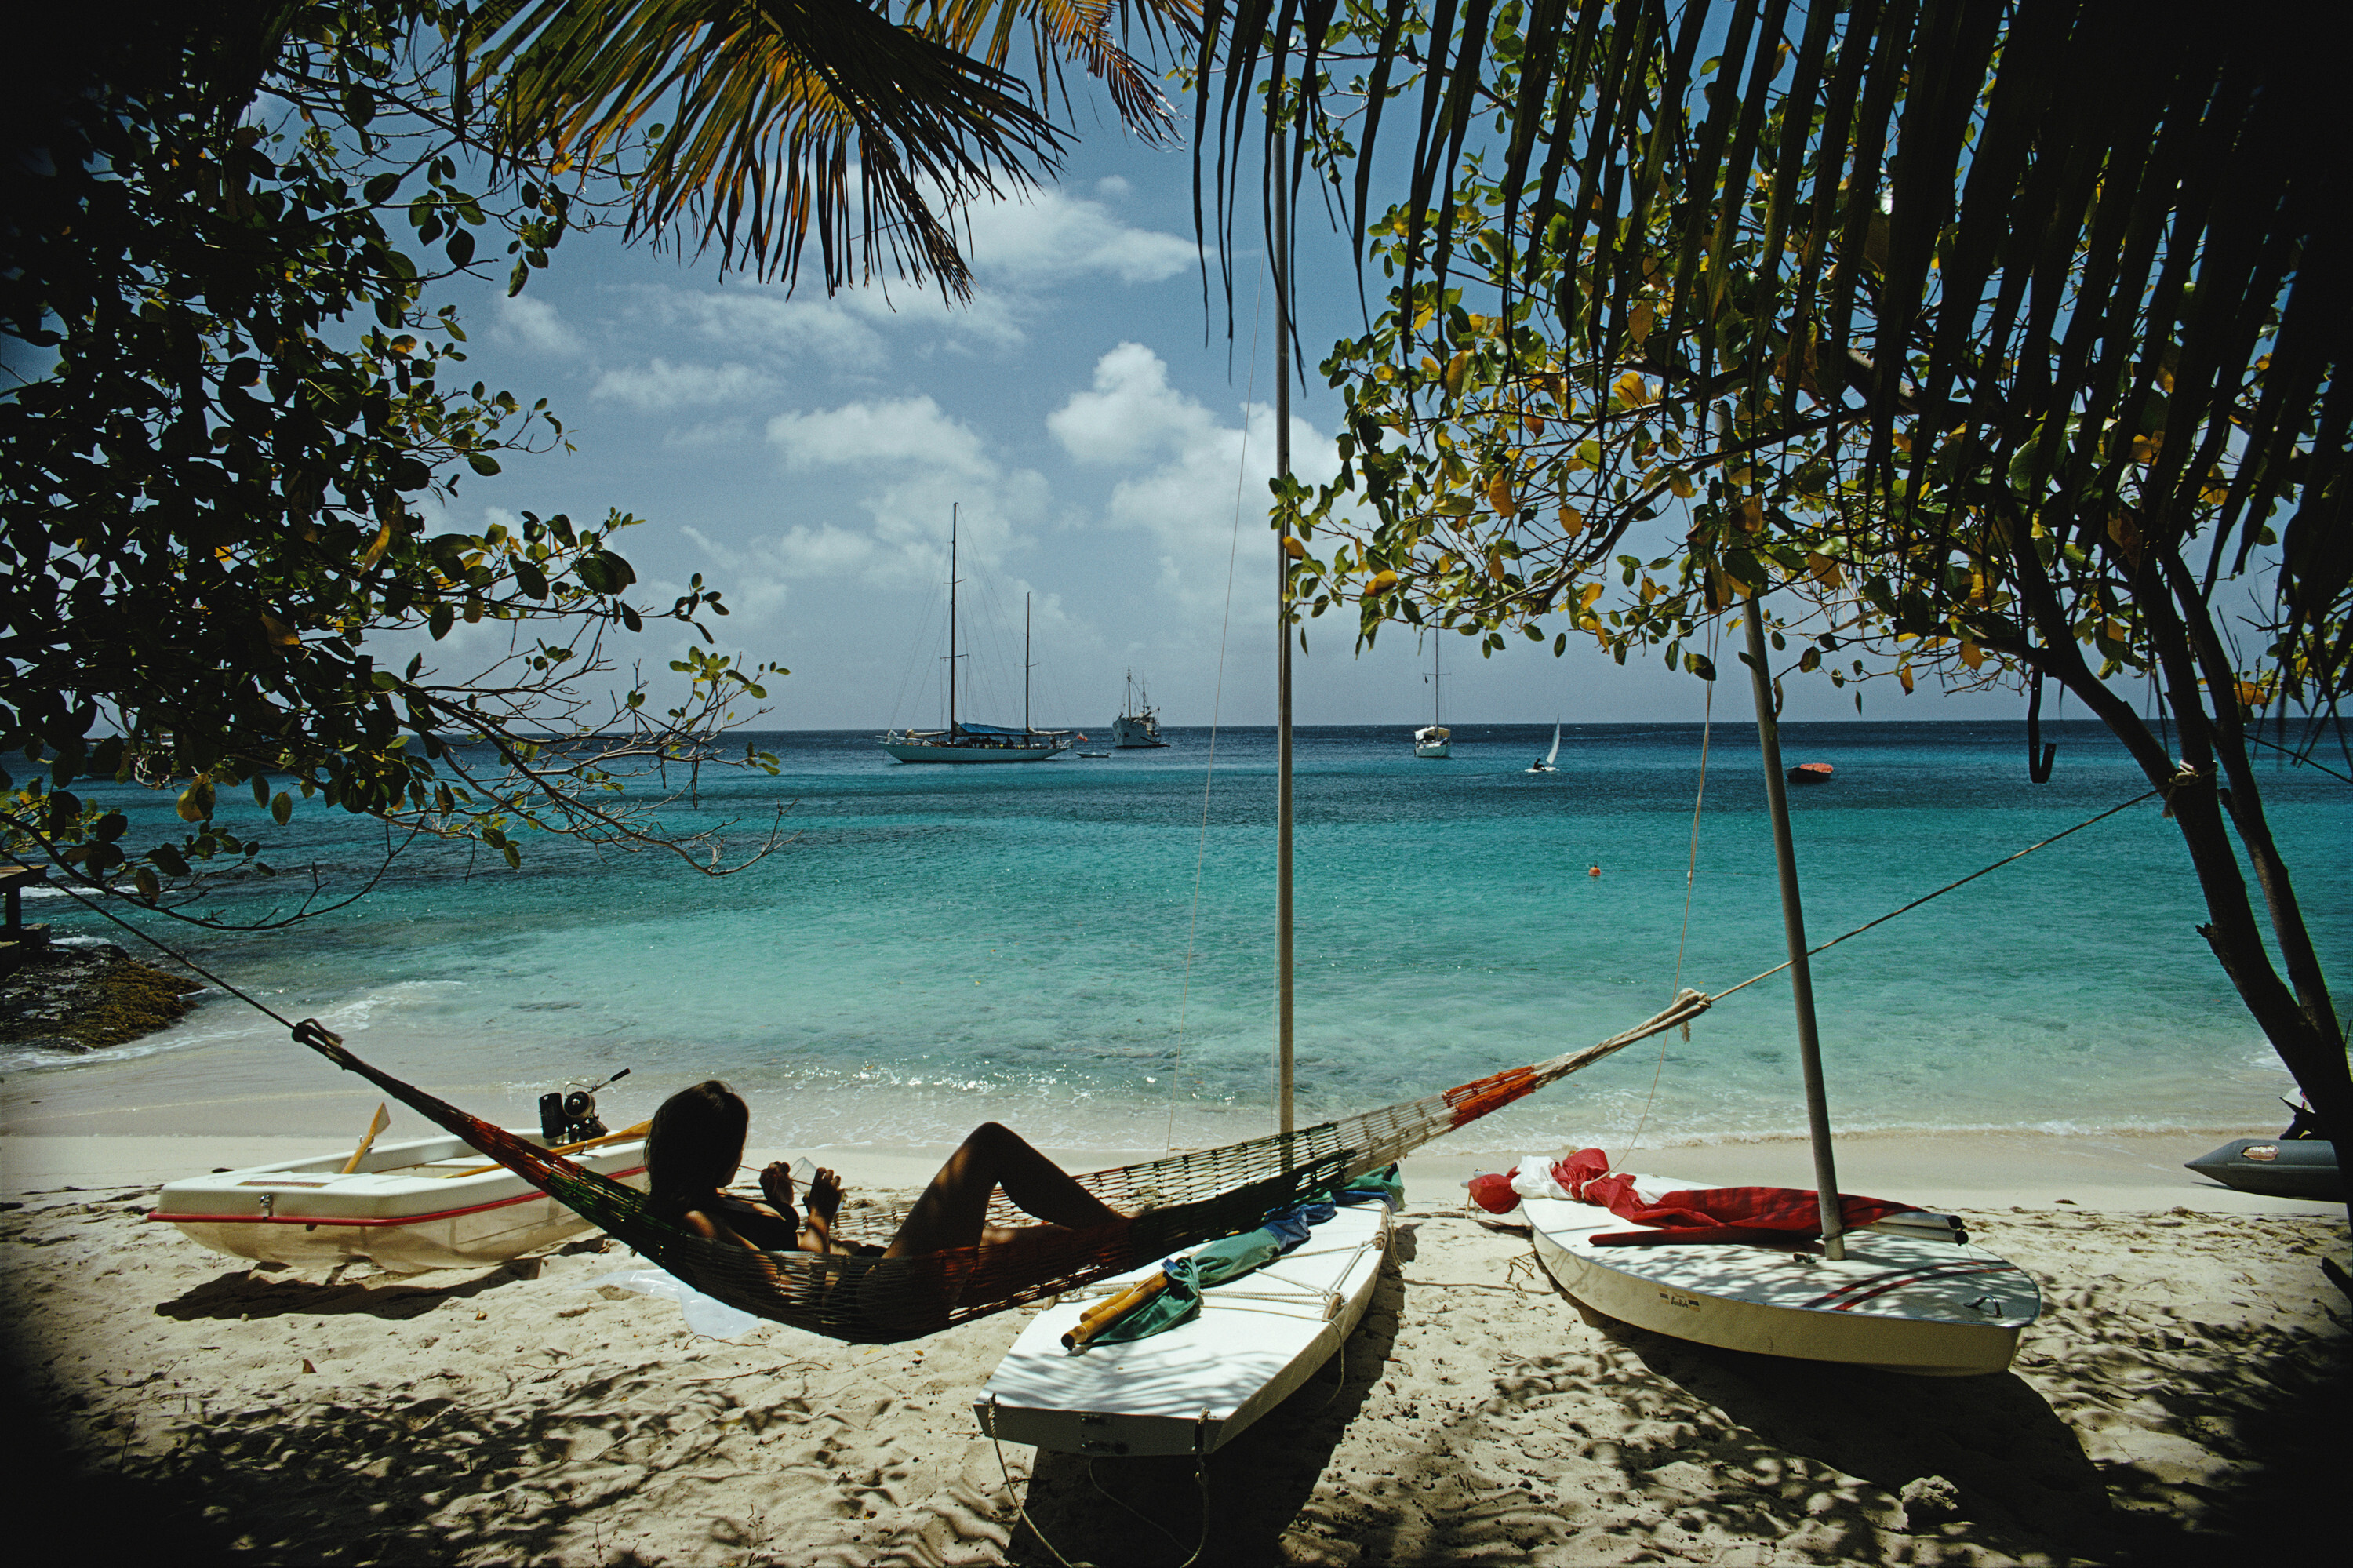 Мюстик, остров в Карибском море, 1973 год. Фотограф Слим Ааронс